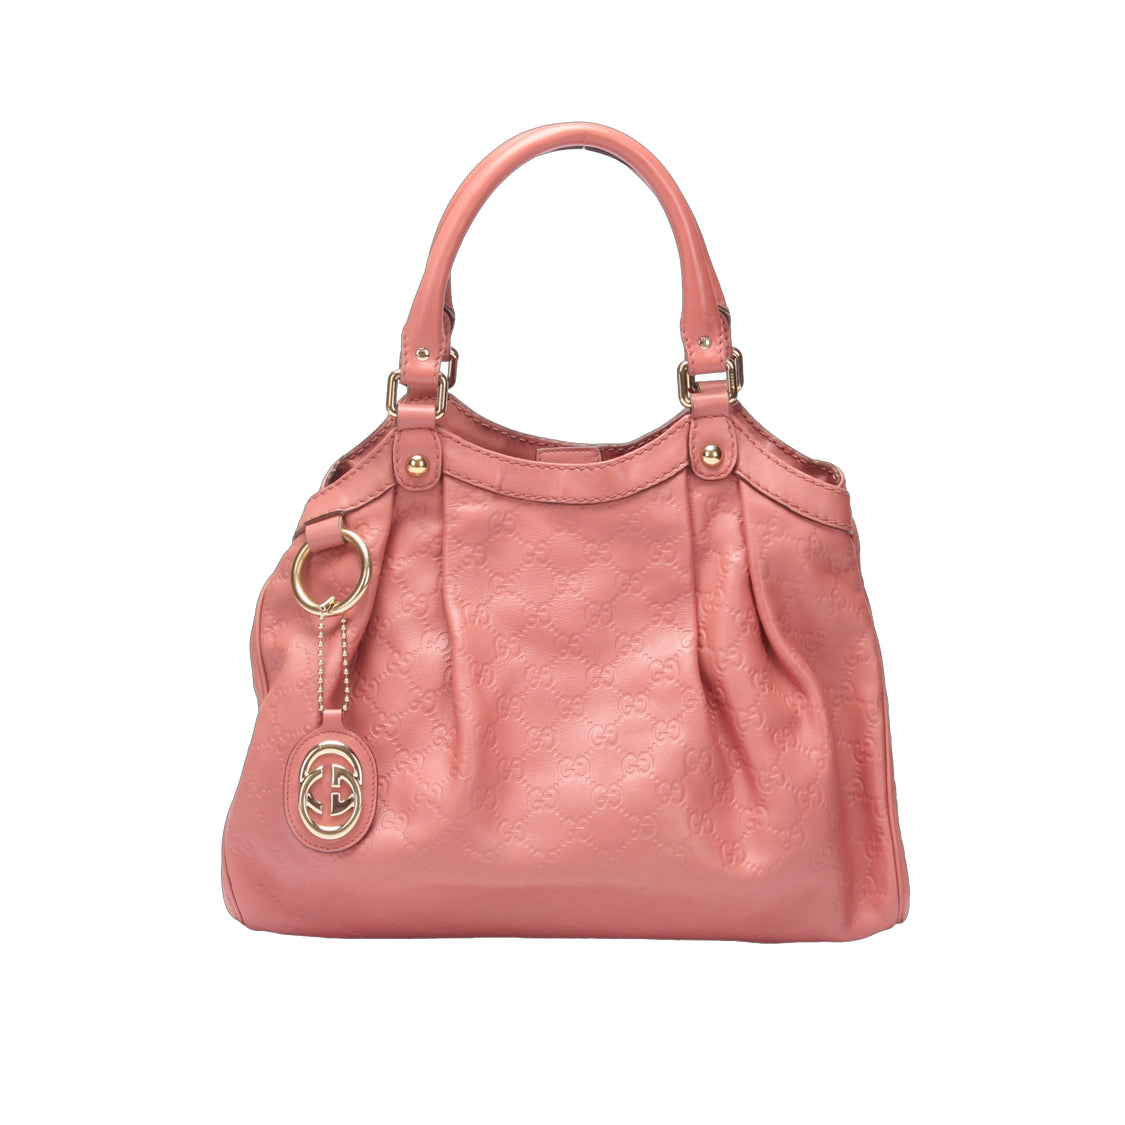 Gucci Guccissima Leather Sukey Handbag Leather Handbag 211944 in Good condition